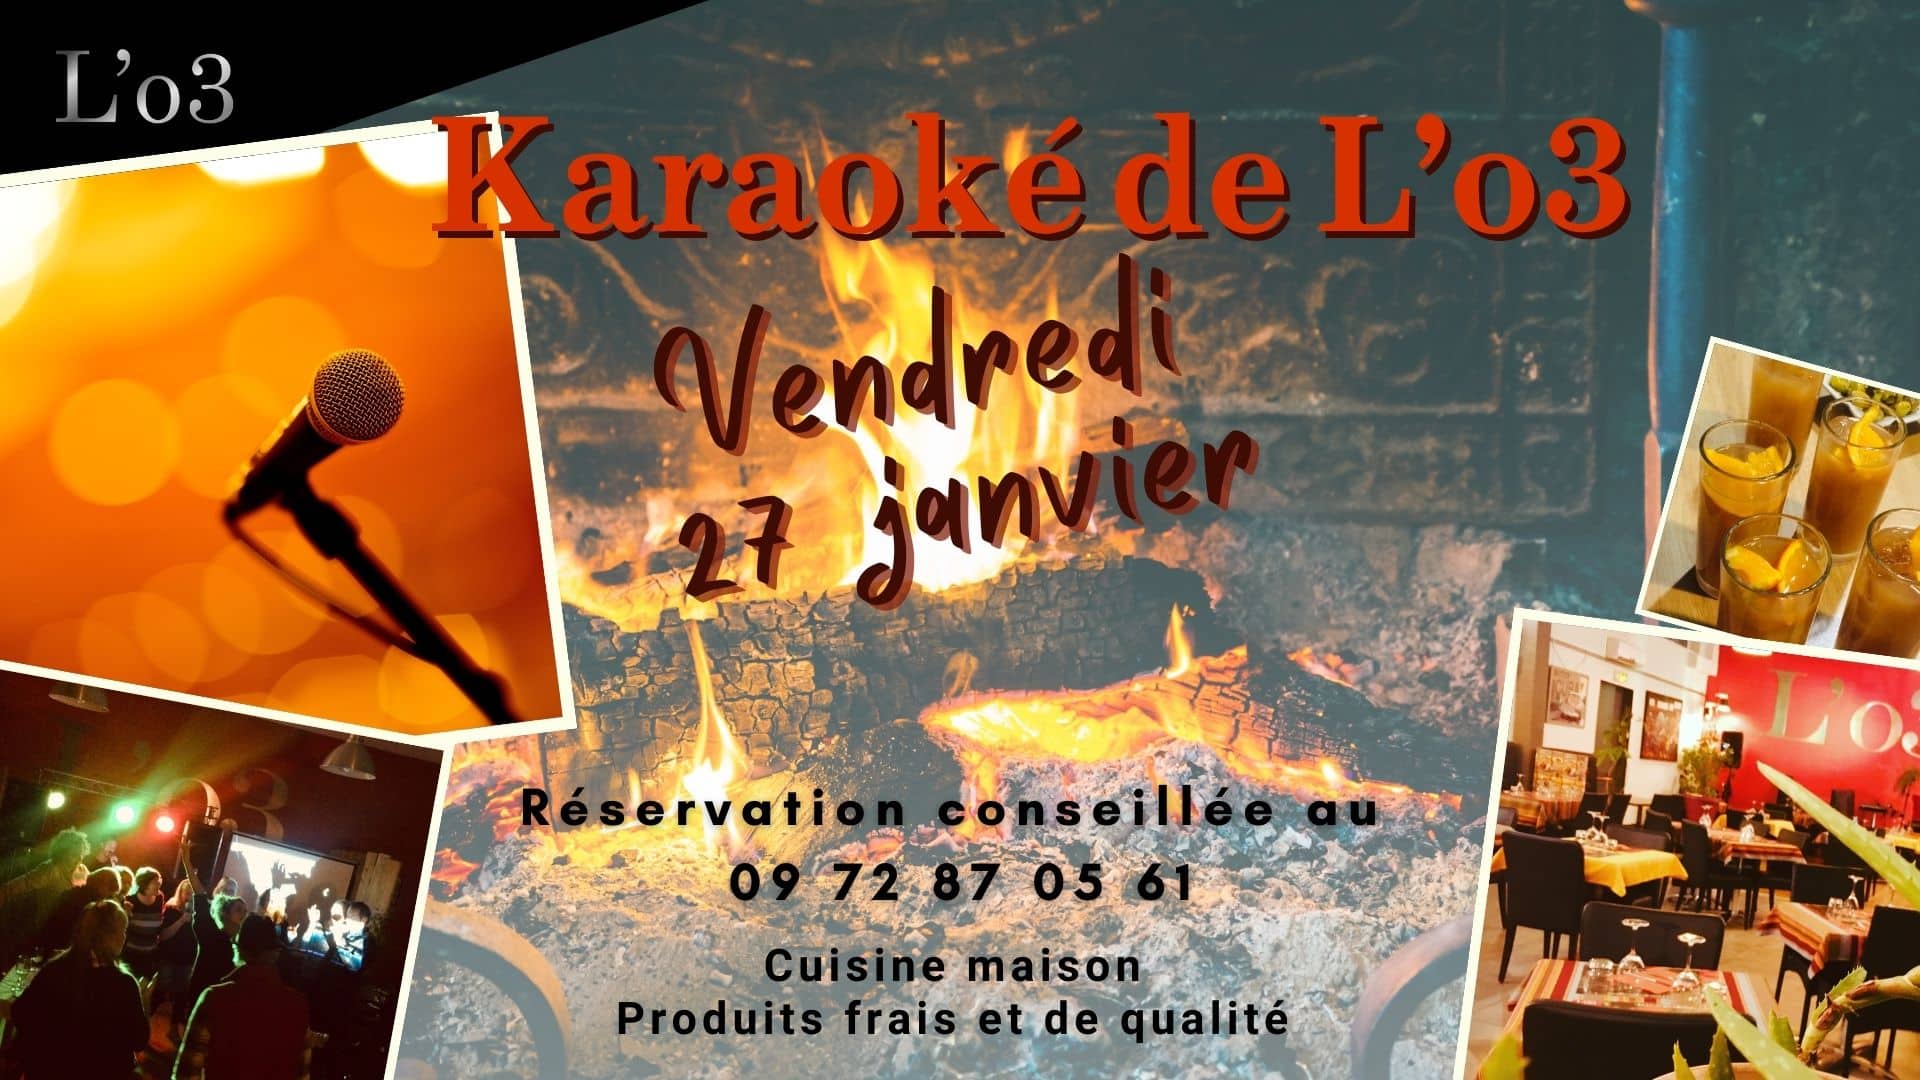 Karaoké, on chante à L’o3 le vendredi 27/01 !